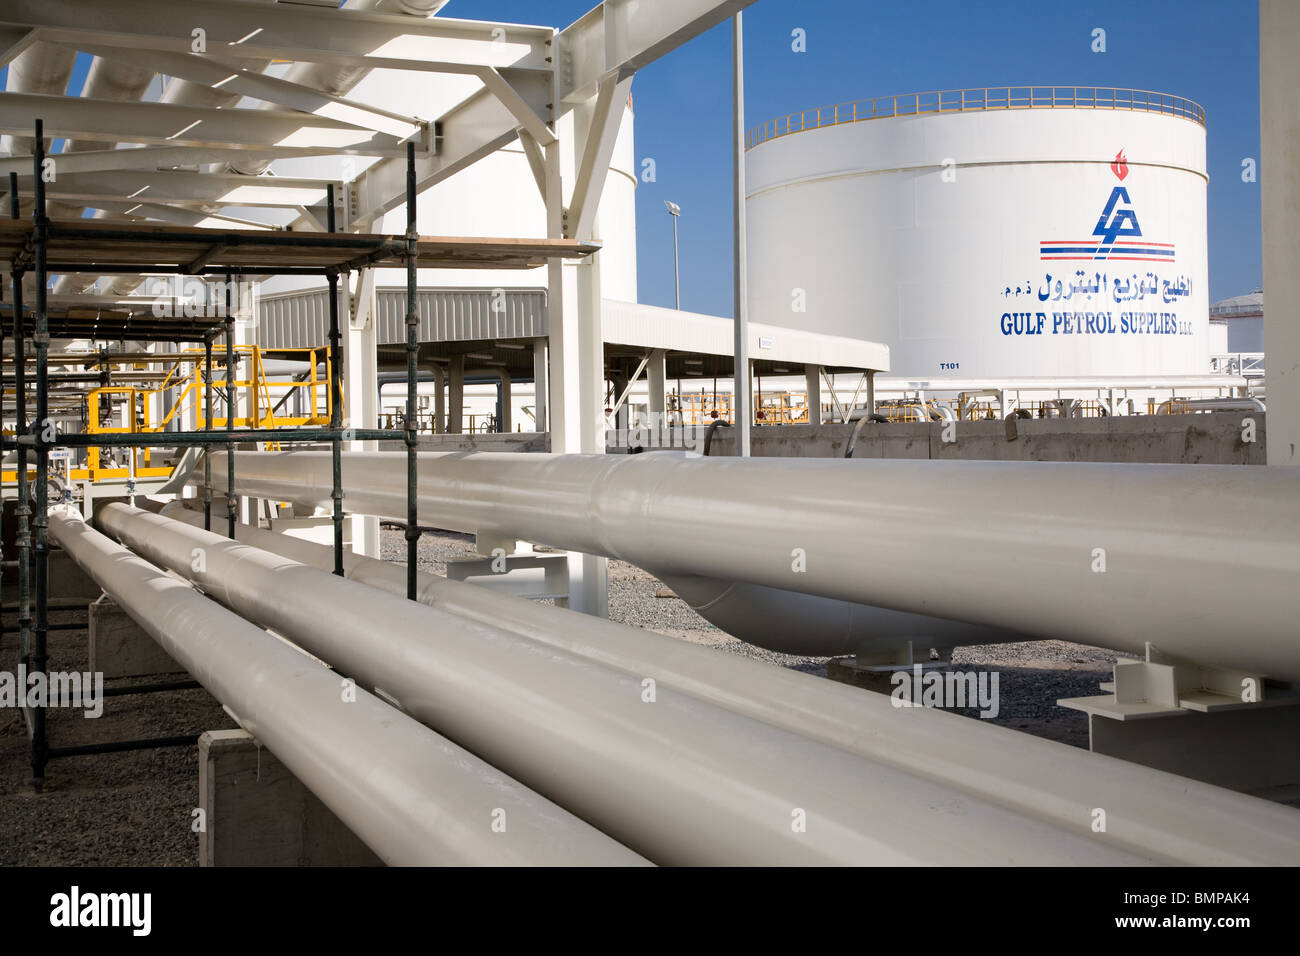 petrochemical oil storage tank farm tanks pipes Stock Photo